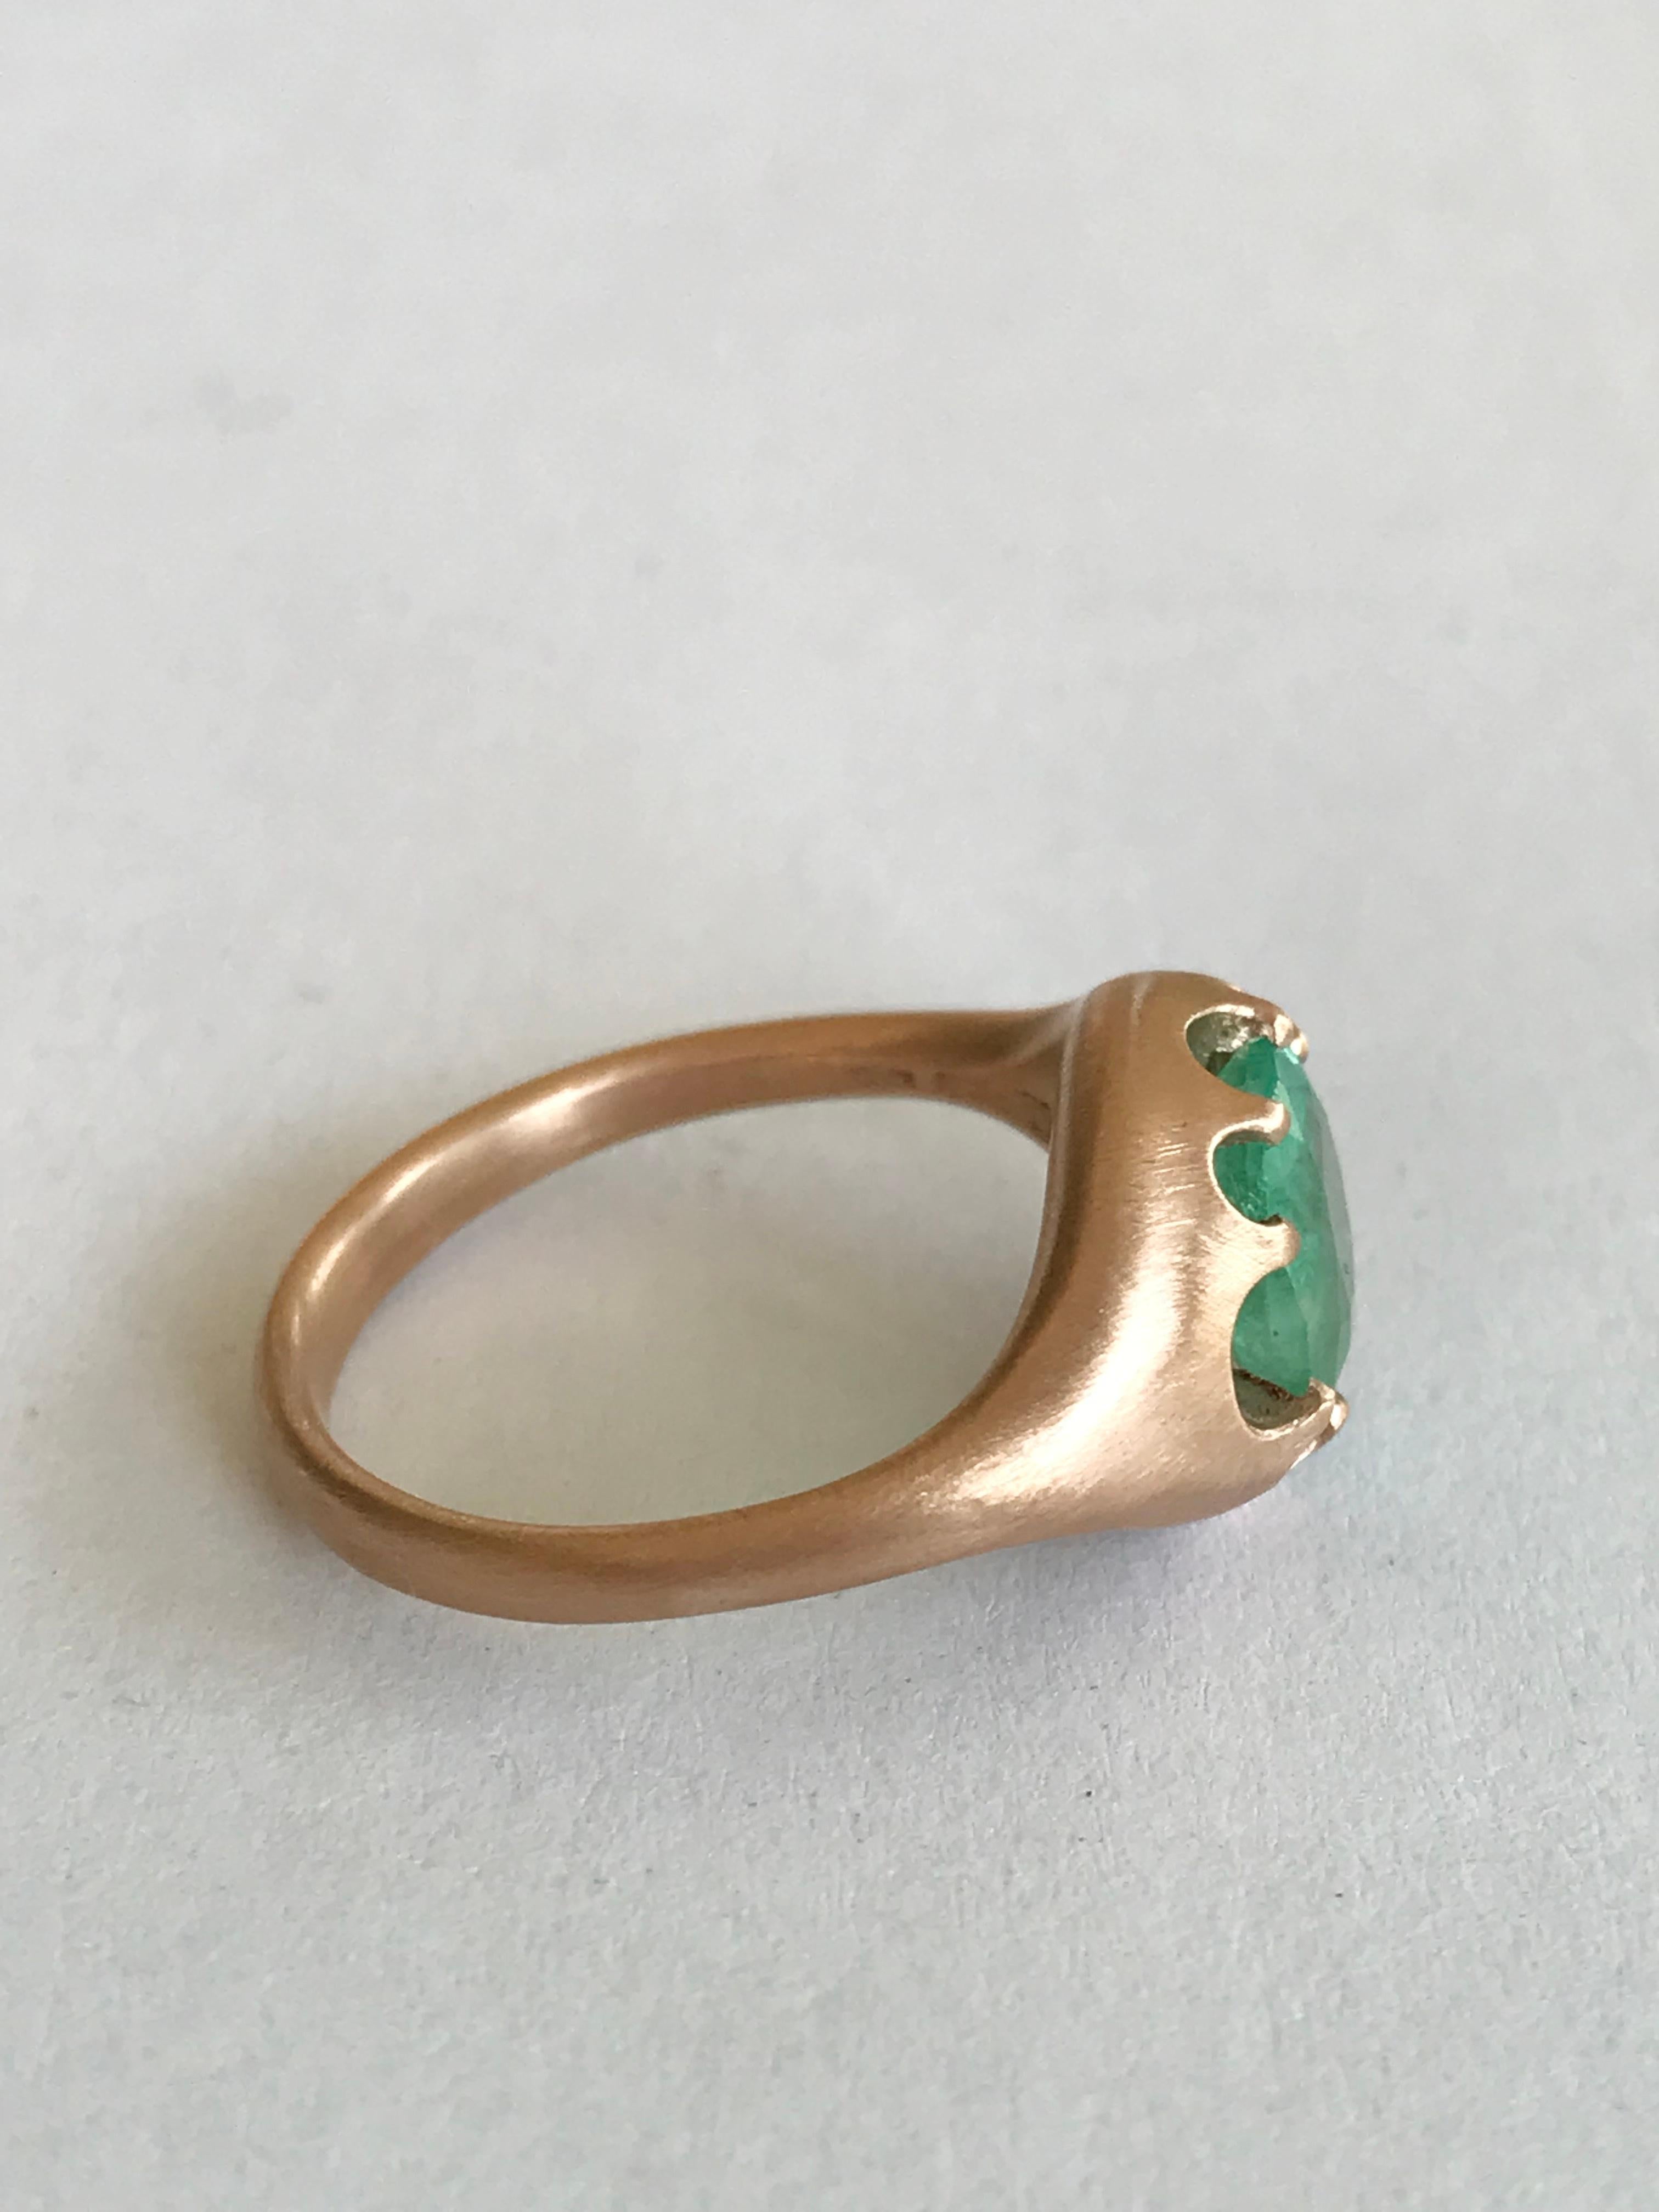 Dalben 1, 26 Ct Cushion Cut Emerald Rose Gold Ring For Sale 5